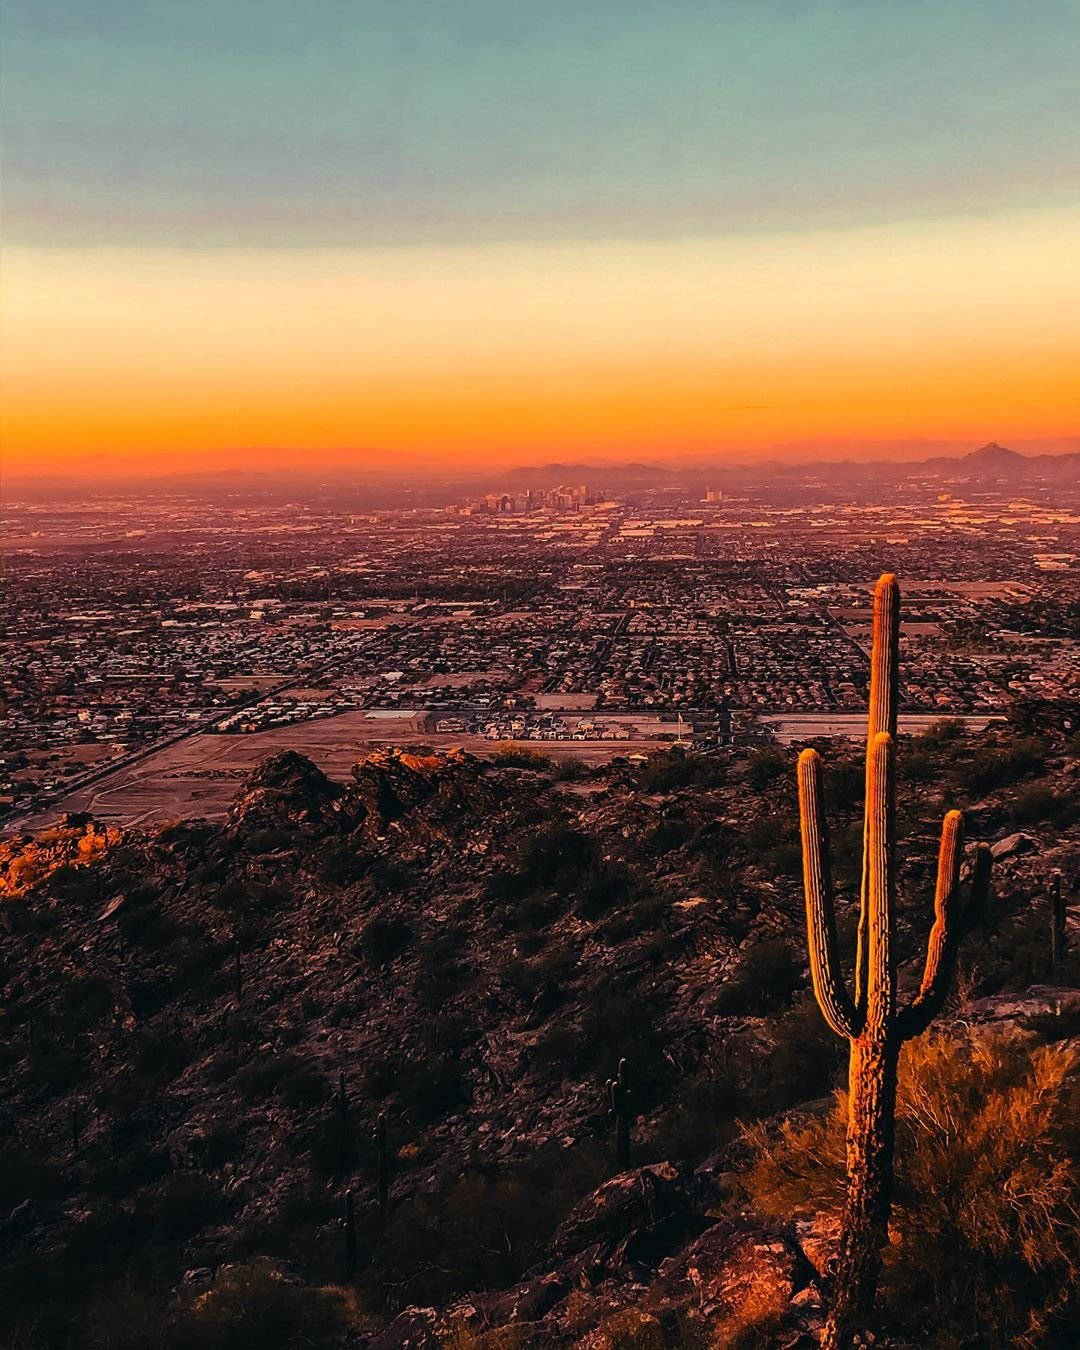 Arizona-ørkenen Under Solnedgang Wallpaper